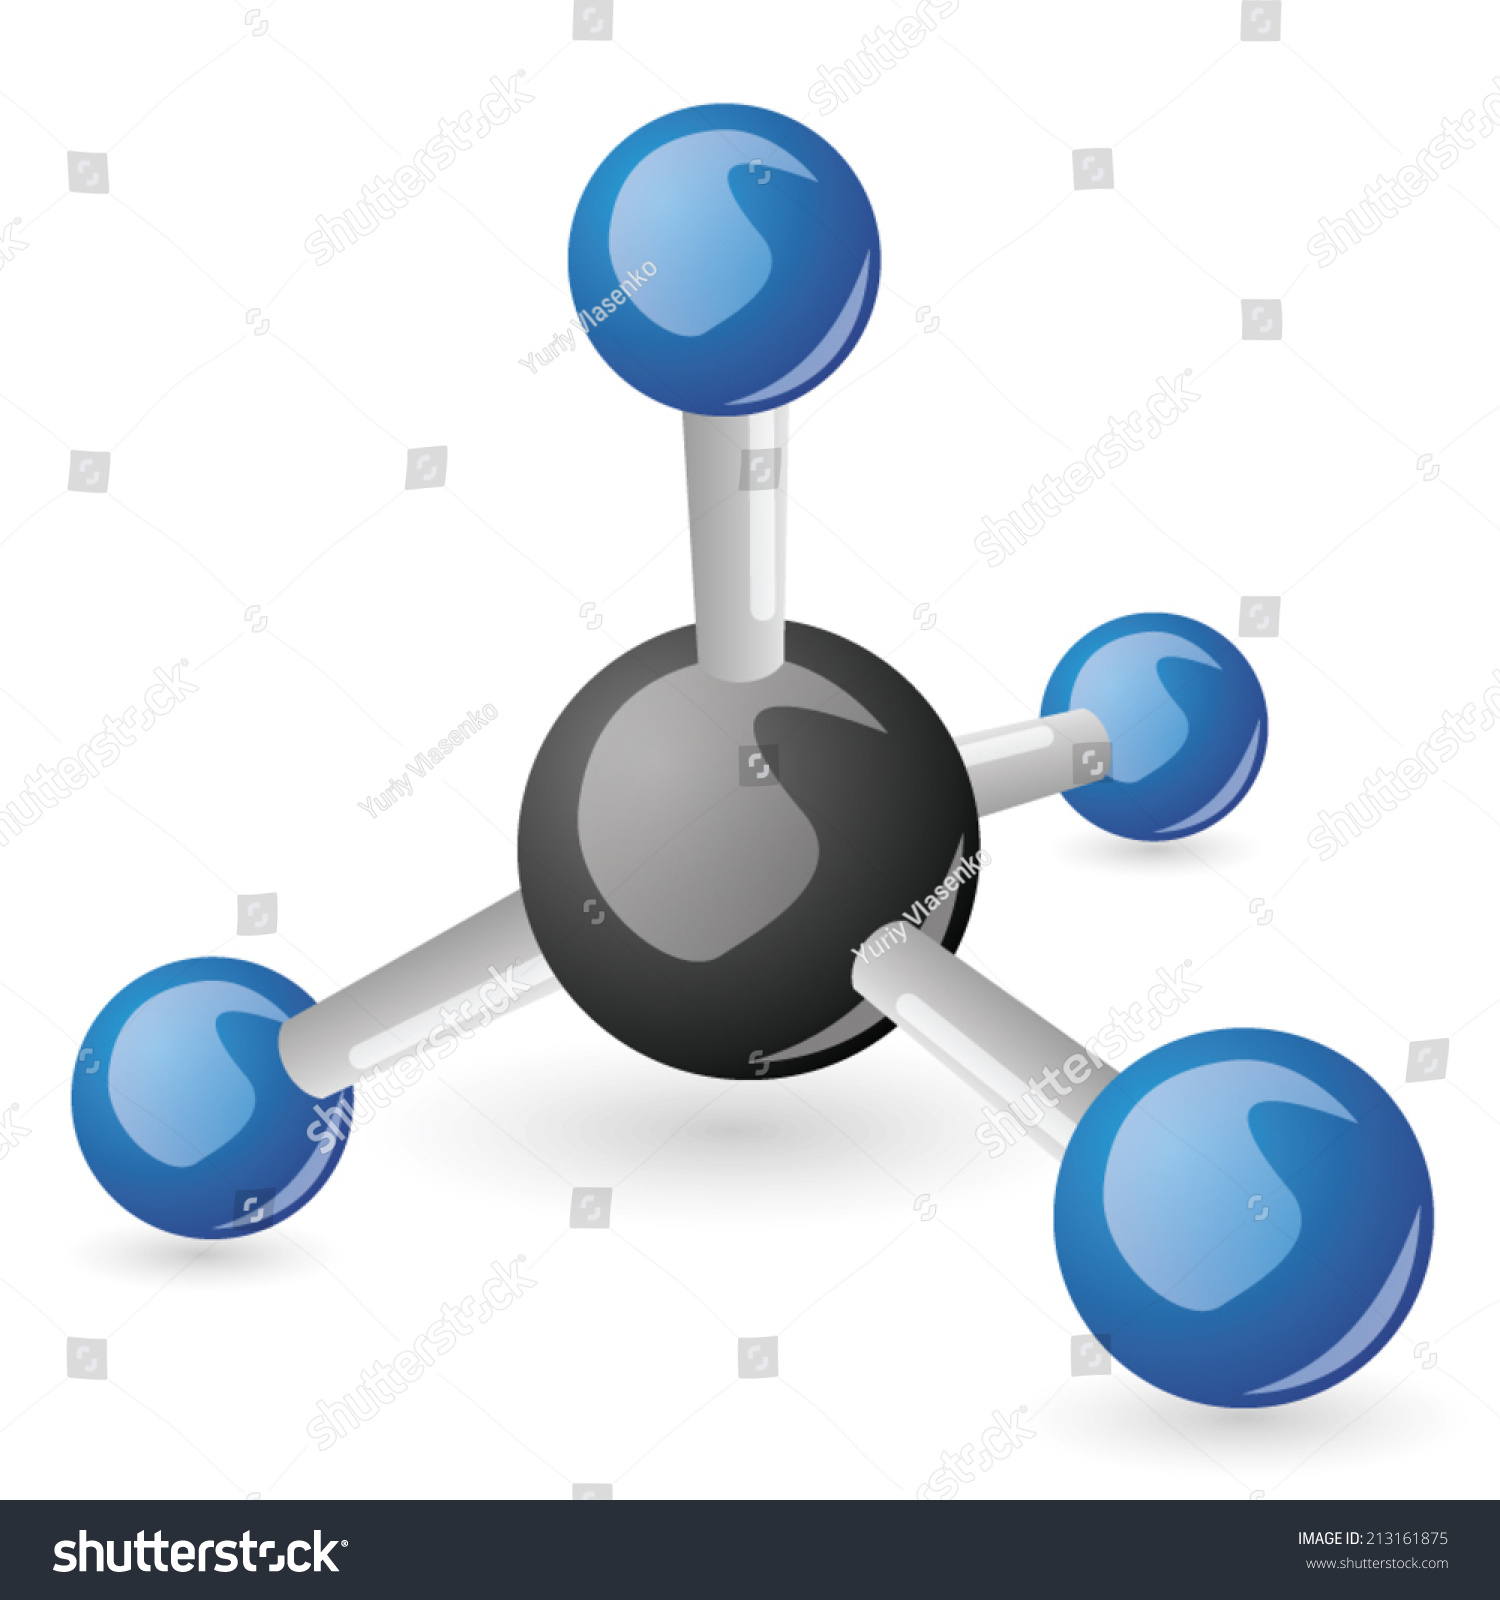 Ch4 Methane Molecule Stock Vector Royalty Free 213161875 Shutterstock